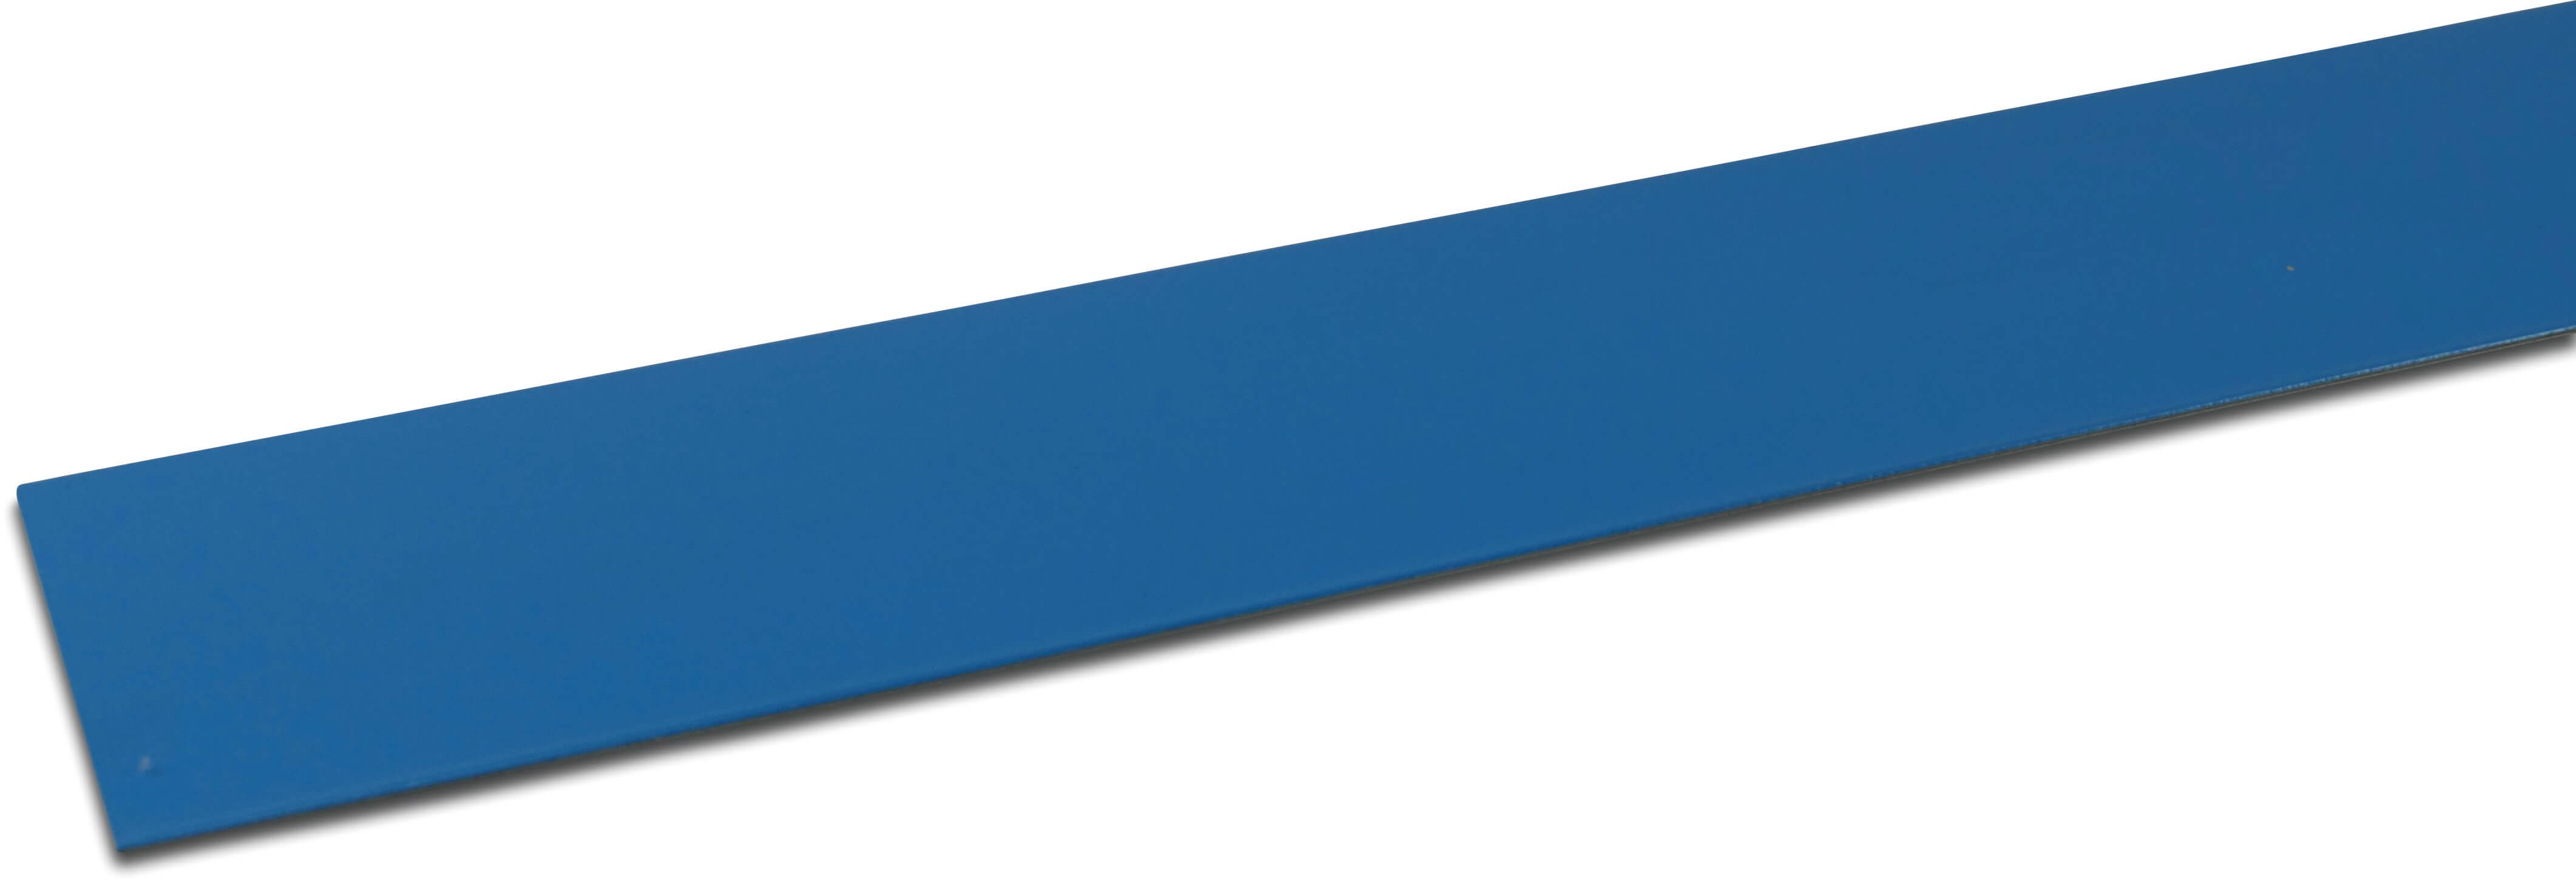 Elbe Stribe PVC belagt metal 70 mm x 2000 mm blå 2m